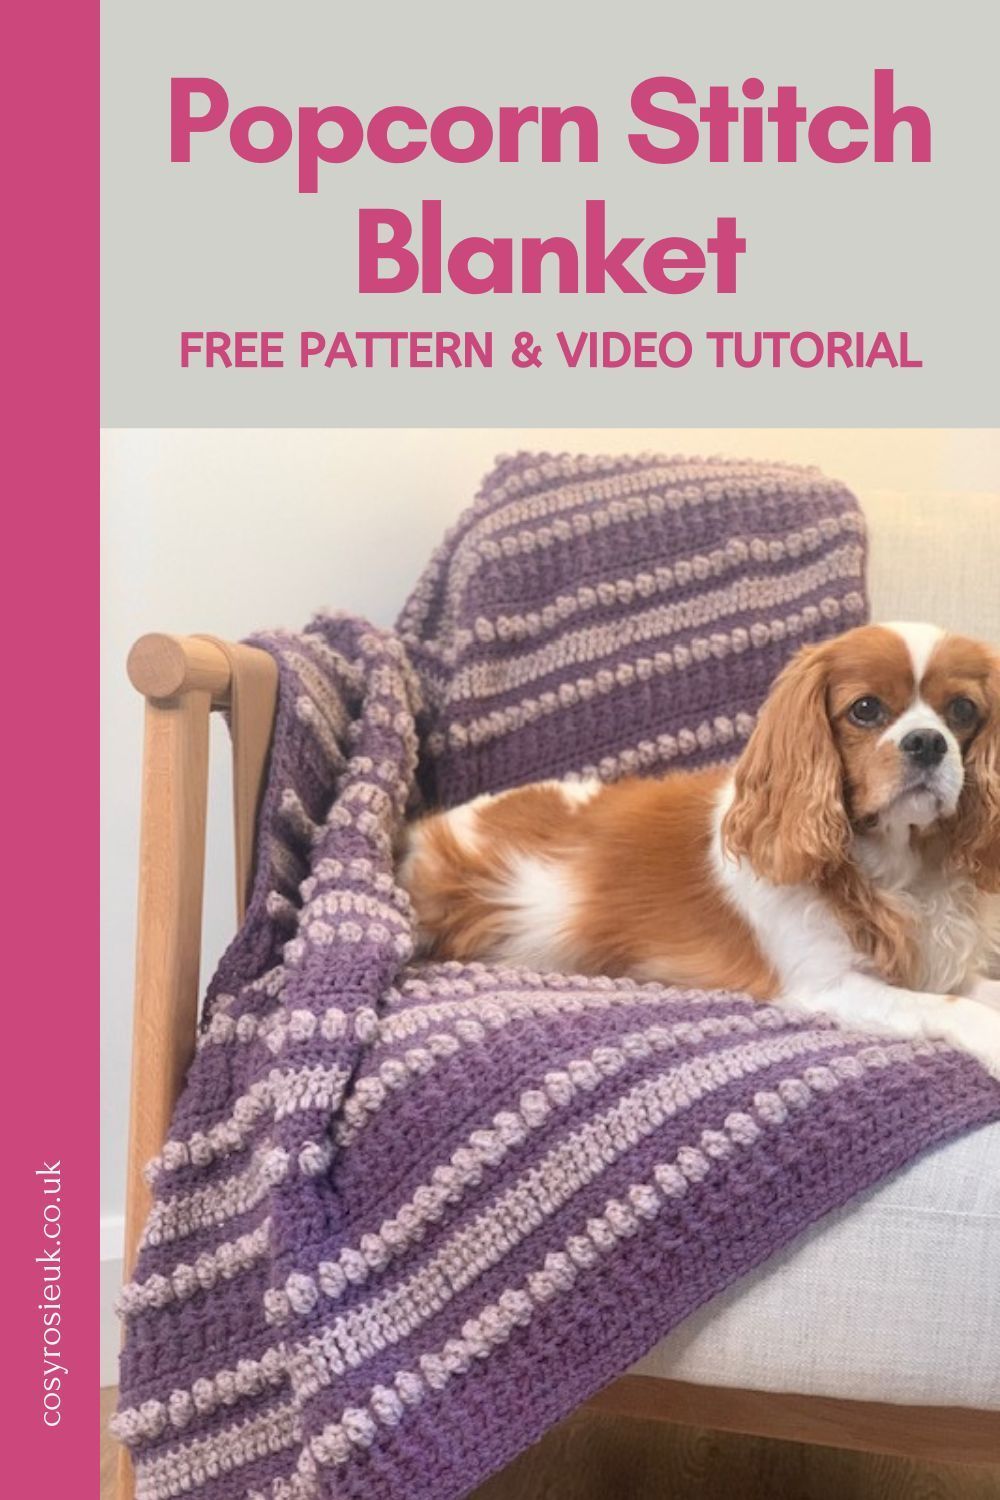 Crochet Popcorn stitch blanket with video tutorial